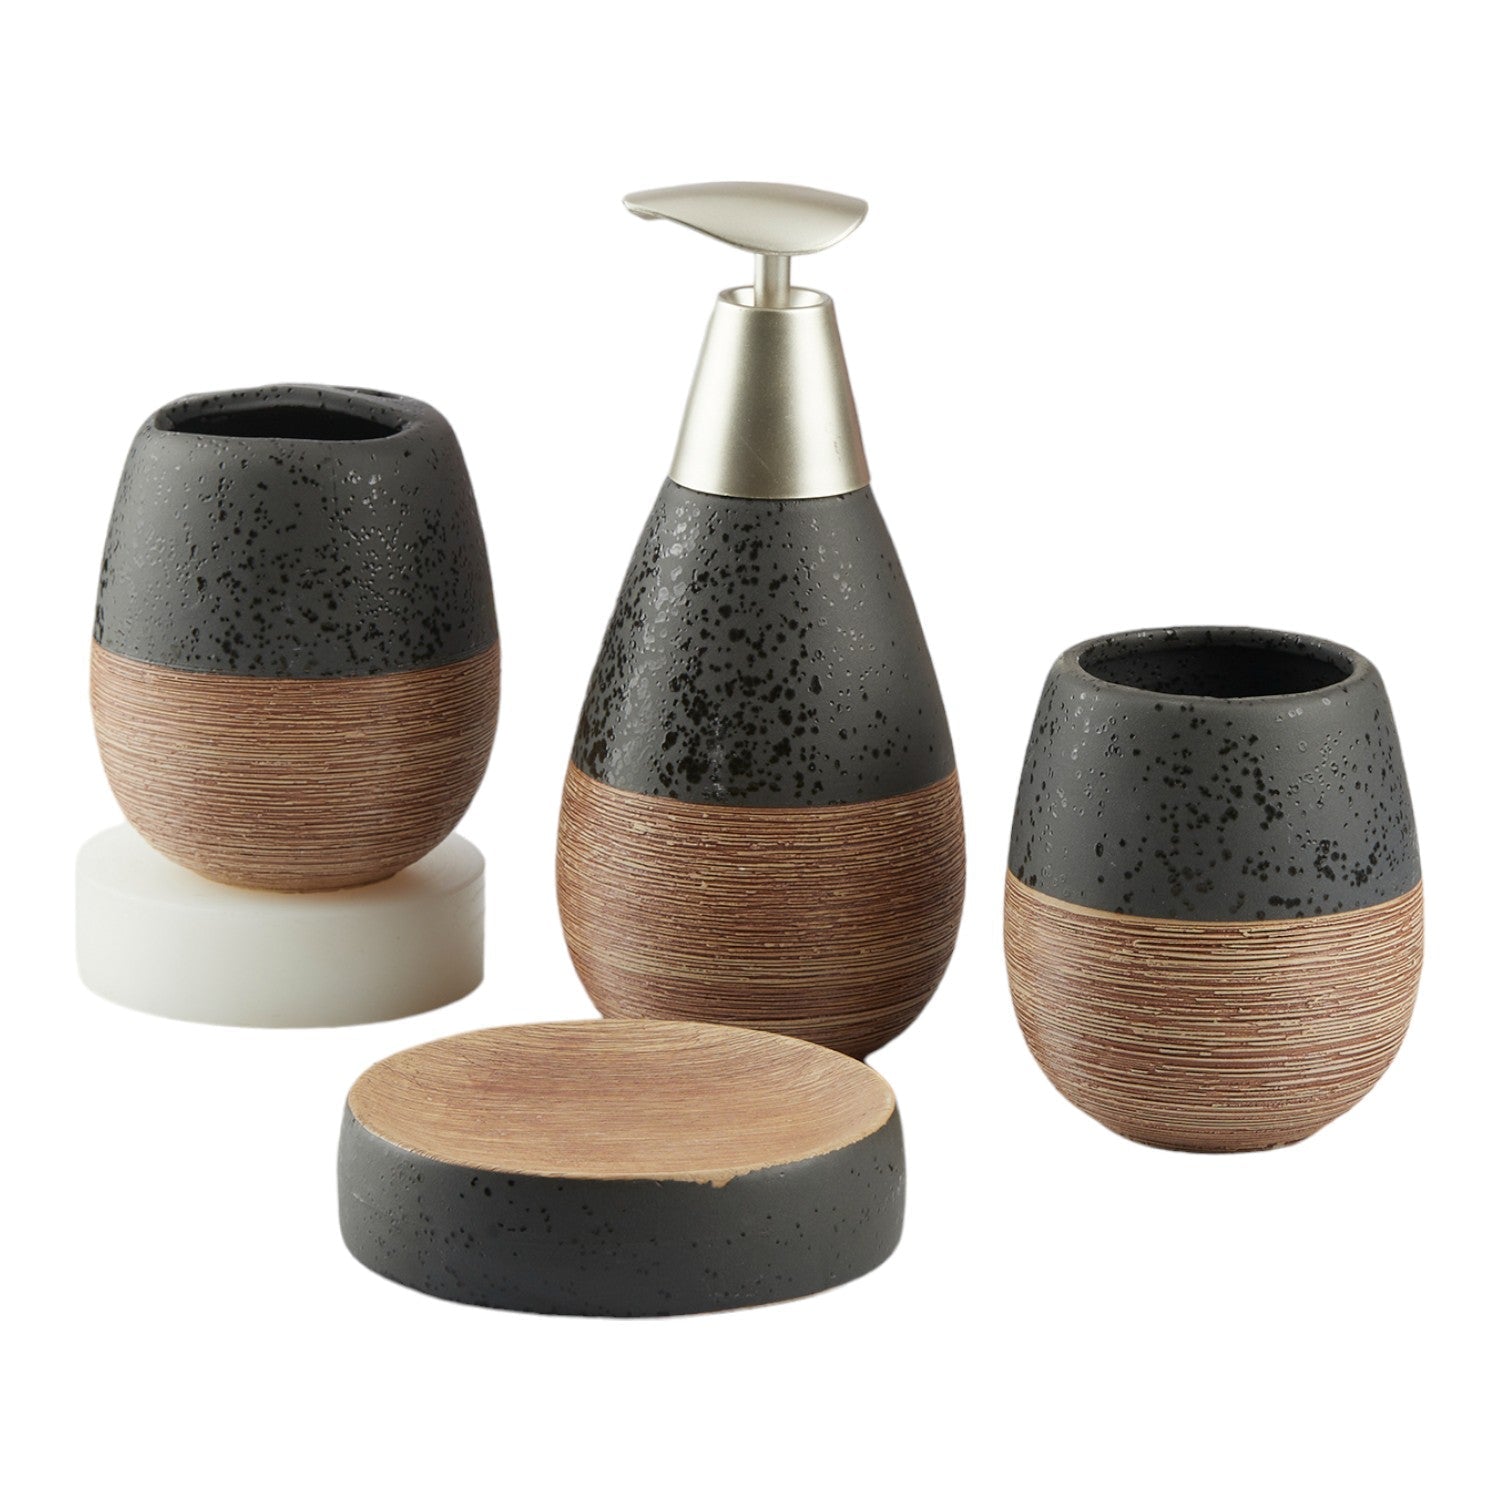 Ceramic Bathroom Accessories Set of 4 Bath Set with Soap Dispenser (8848)